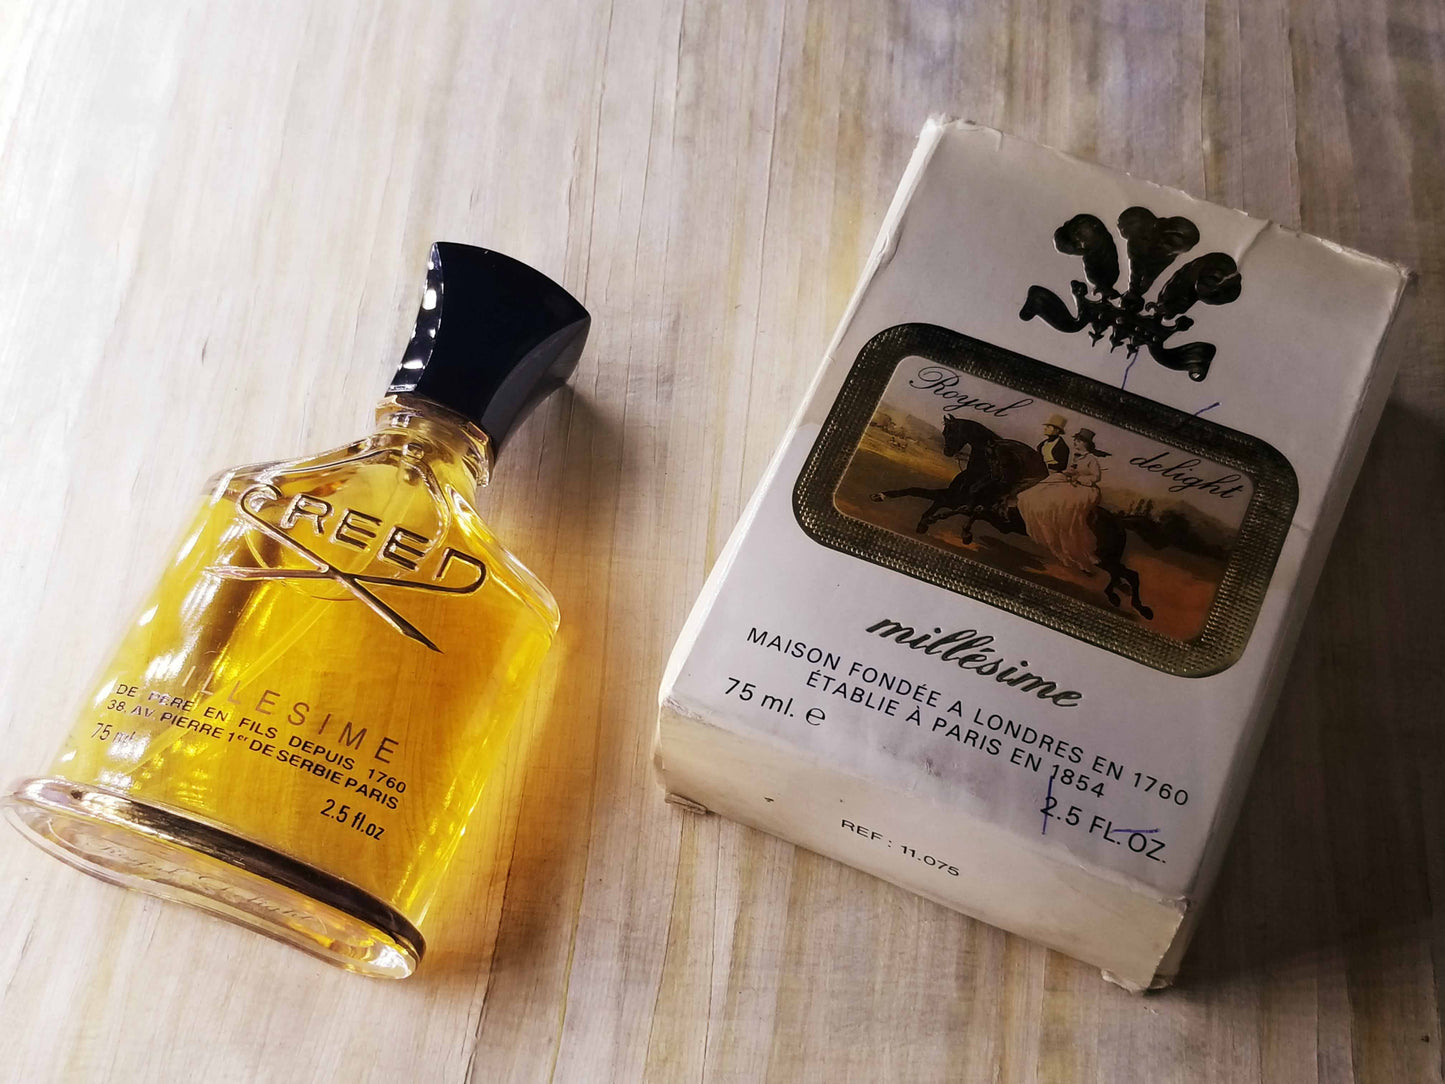 Royal Delight Creed Unisex EDP Spray 75 ml 2.5 oz, Very Rare, Vintage